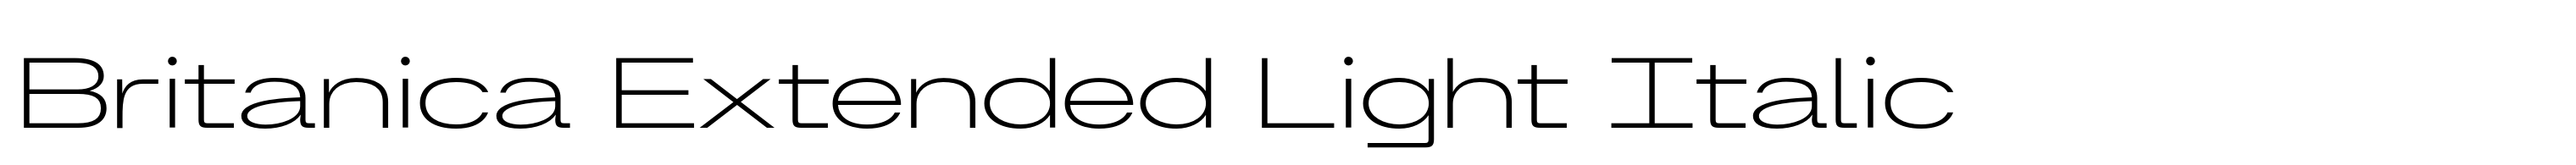 Britanica Extended Light Italic